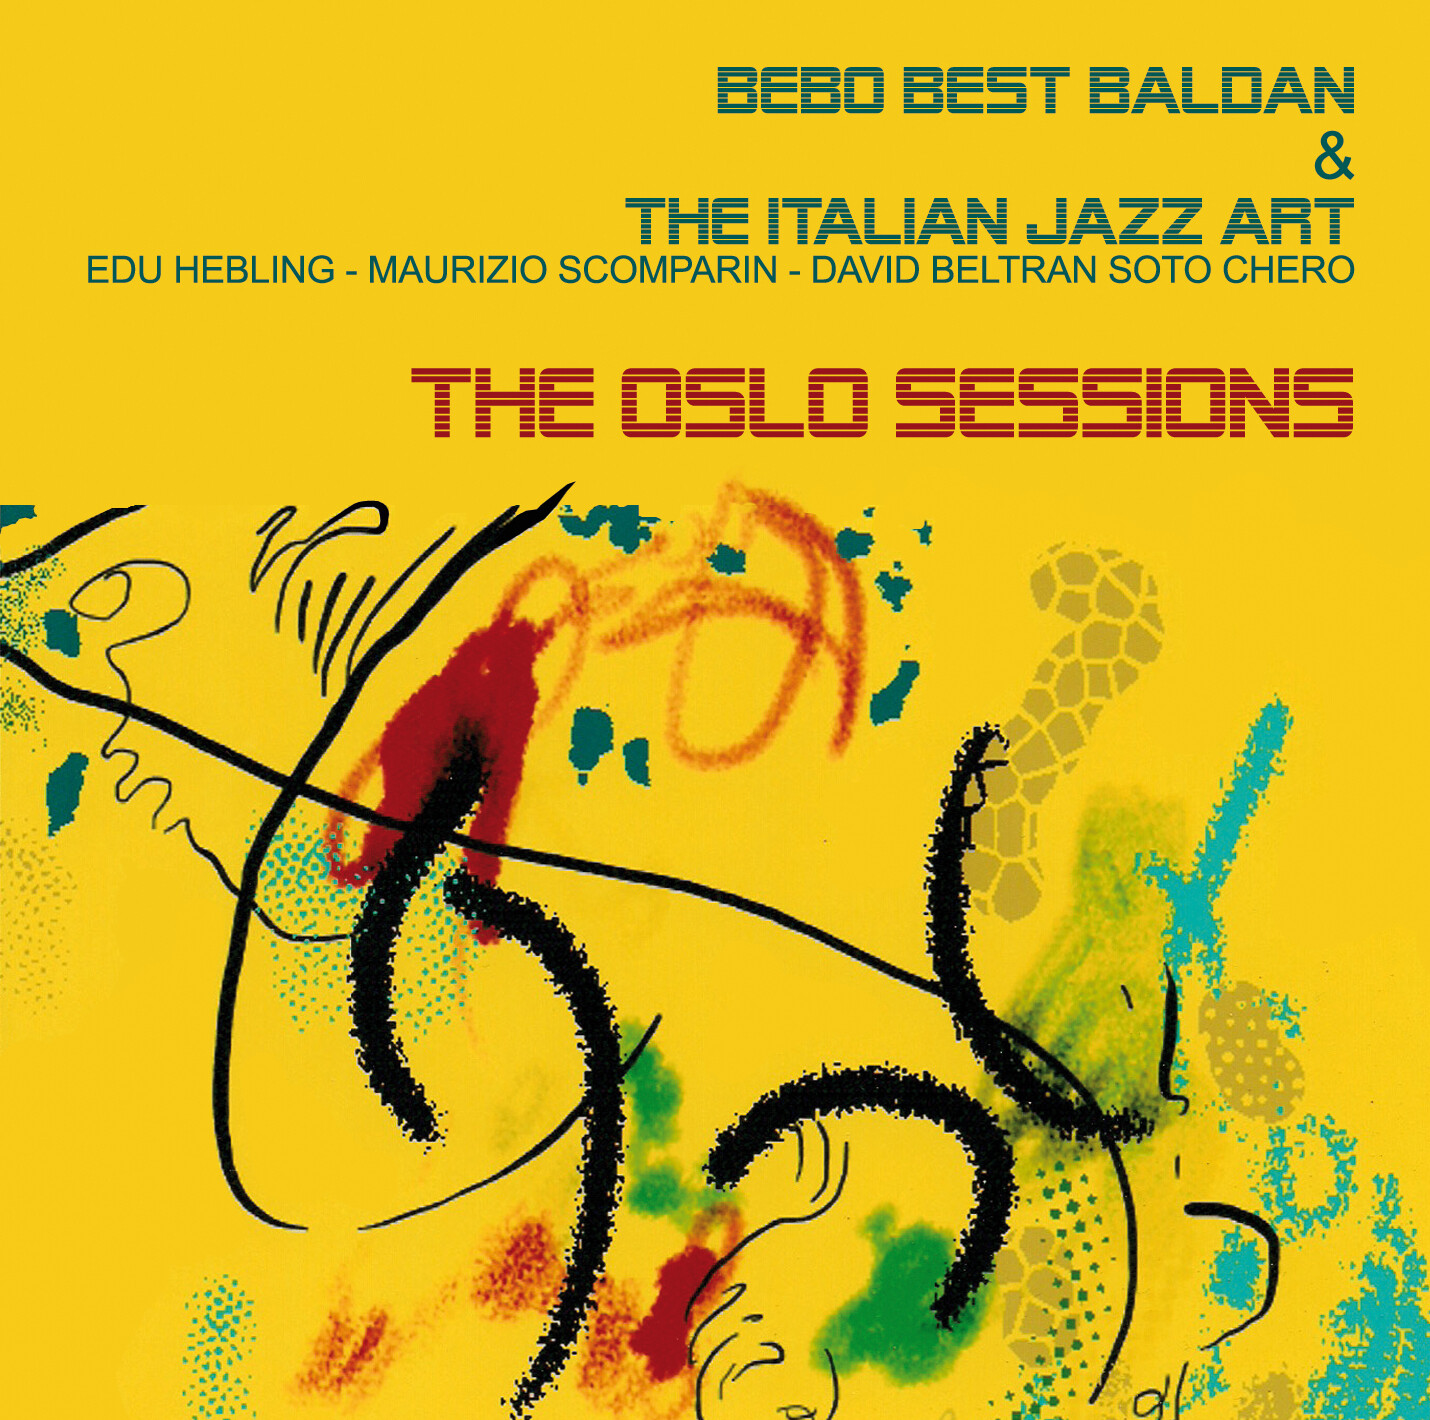 BEBO BEST BALDAN & THE ITALIAN JAZZ ART «The Oslo sessions»